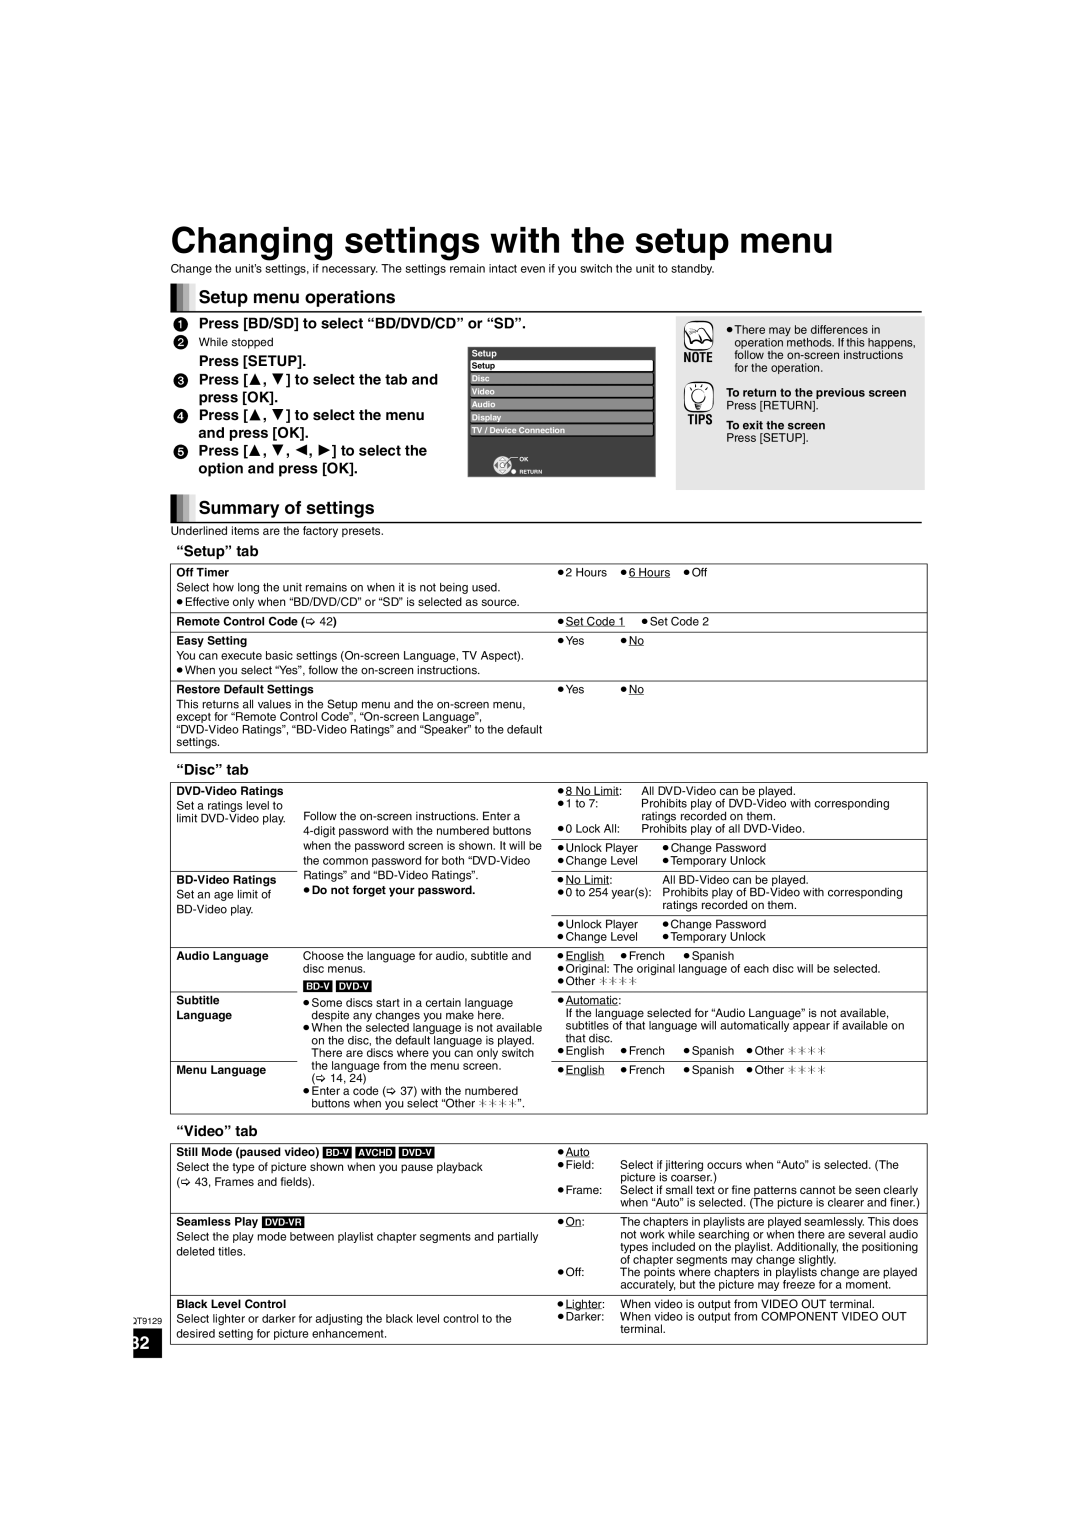 Panasonic SC-BT100 Changing settings with the setup menu, Setup menu operations, Summary of settings, Press SETUP, Tips 